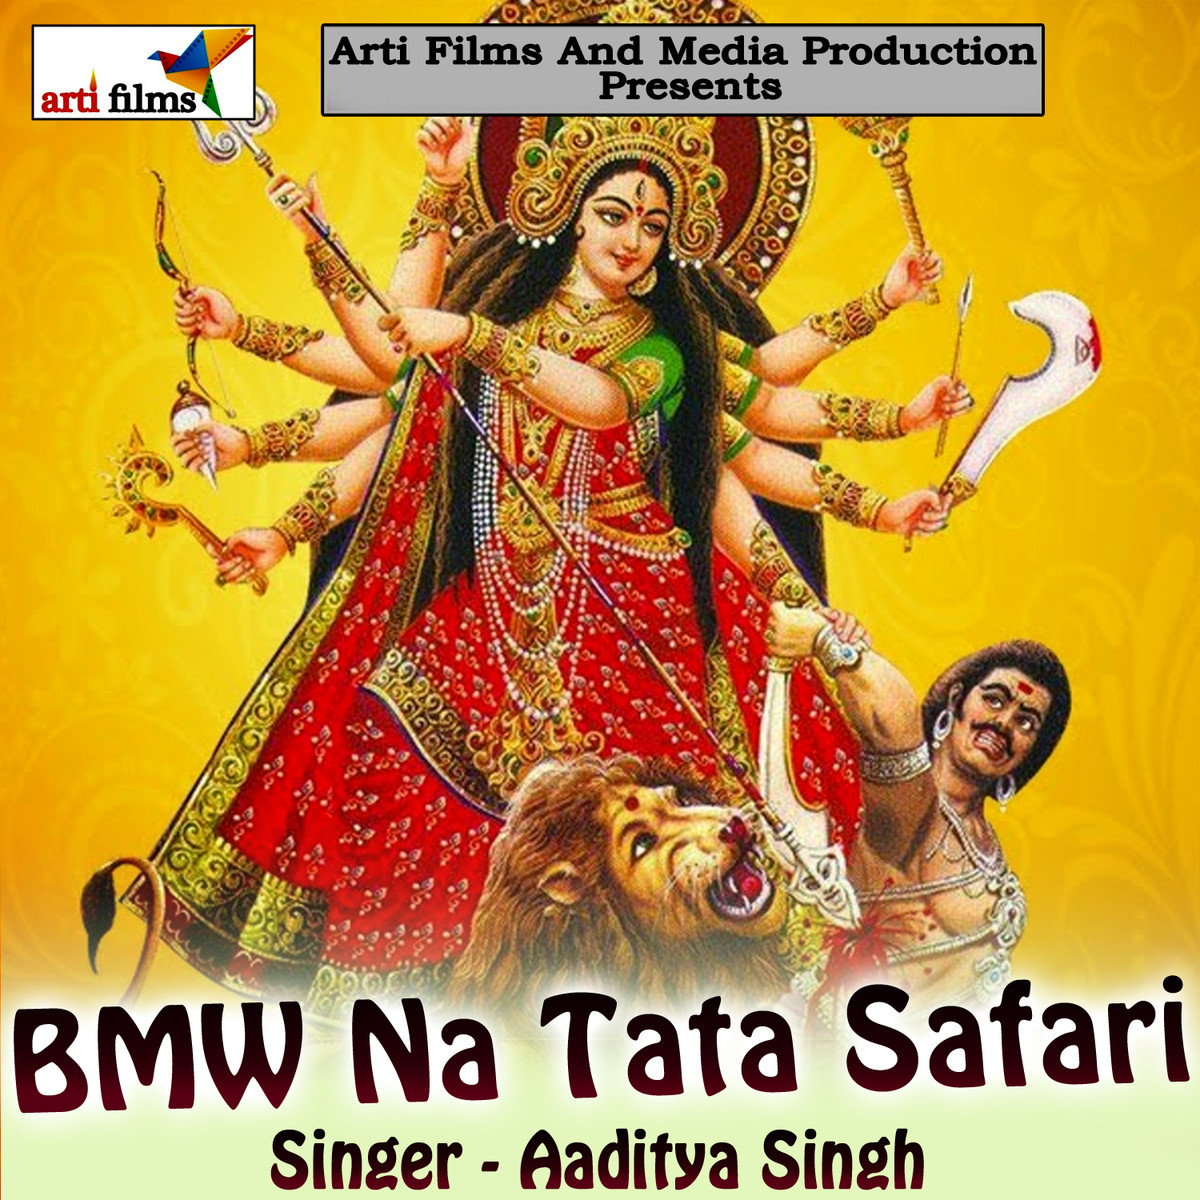 Bmw Na Tata Safari Songs Download Bmw Na Tata Safari Mp3 Bhojpuri Songs Online Free On Gaana Com